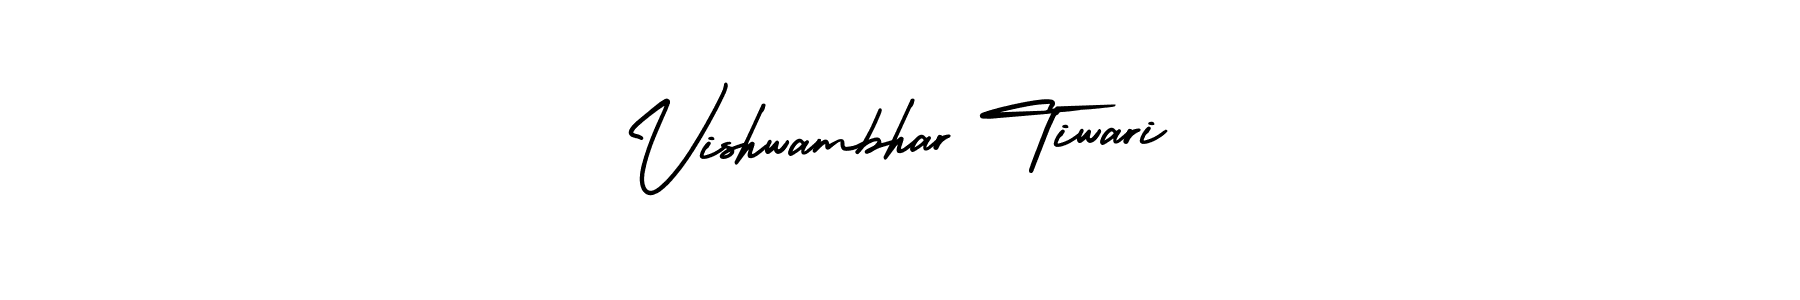 Make a beautiful signature design for name Vishwambhar Tiwari. Use this online signature maker to create a handwritten signature for free. Vishwambhar Tiwari signature style 3 images and pictures png